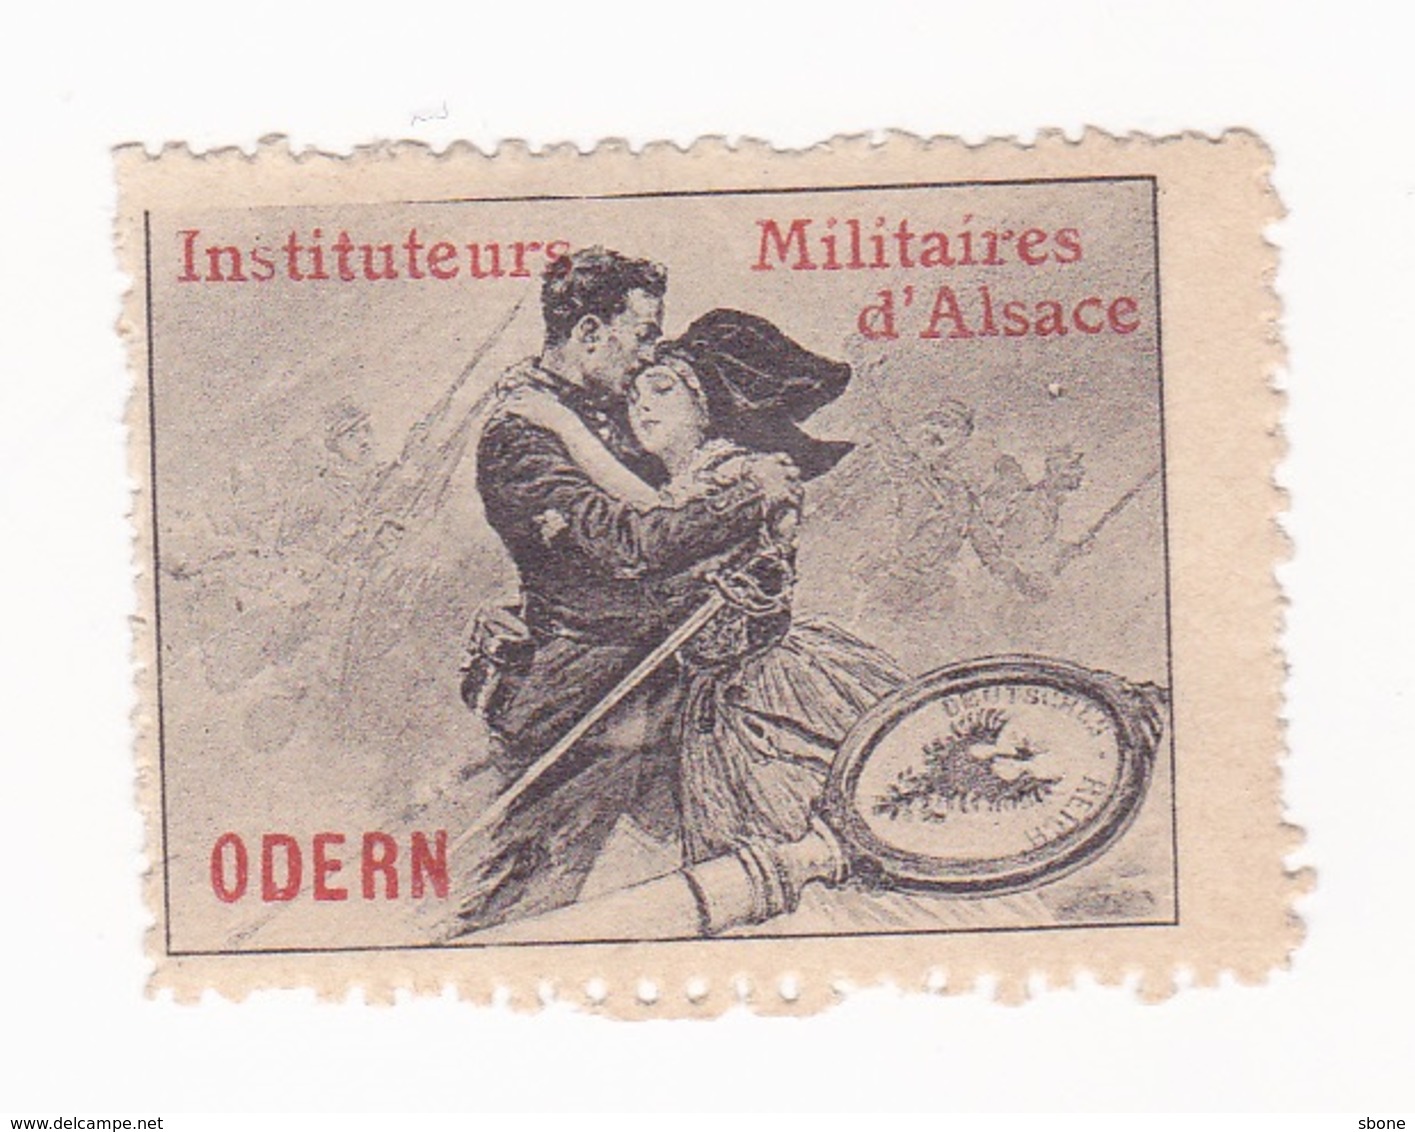 Vignette Militaire Delandre - Instituteurs Militaires D'Alsace - Odern - Military Heritage